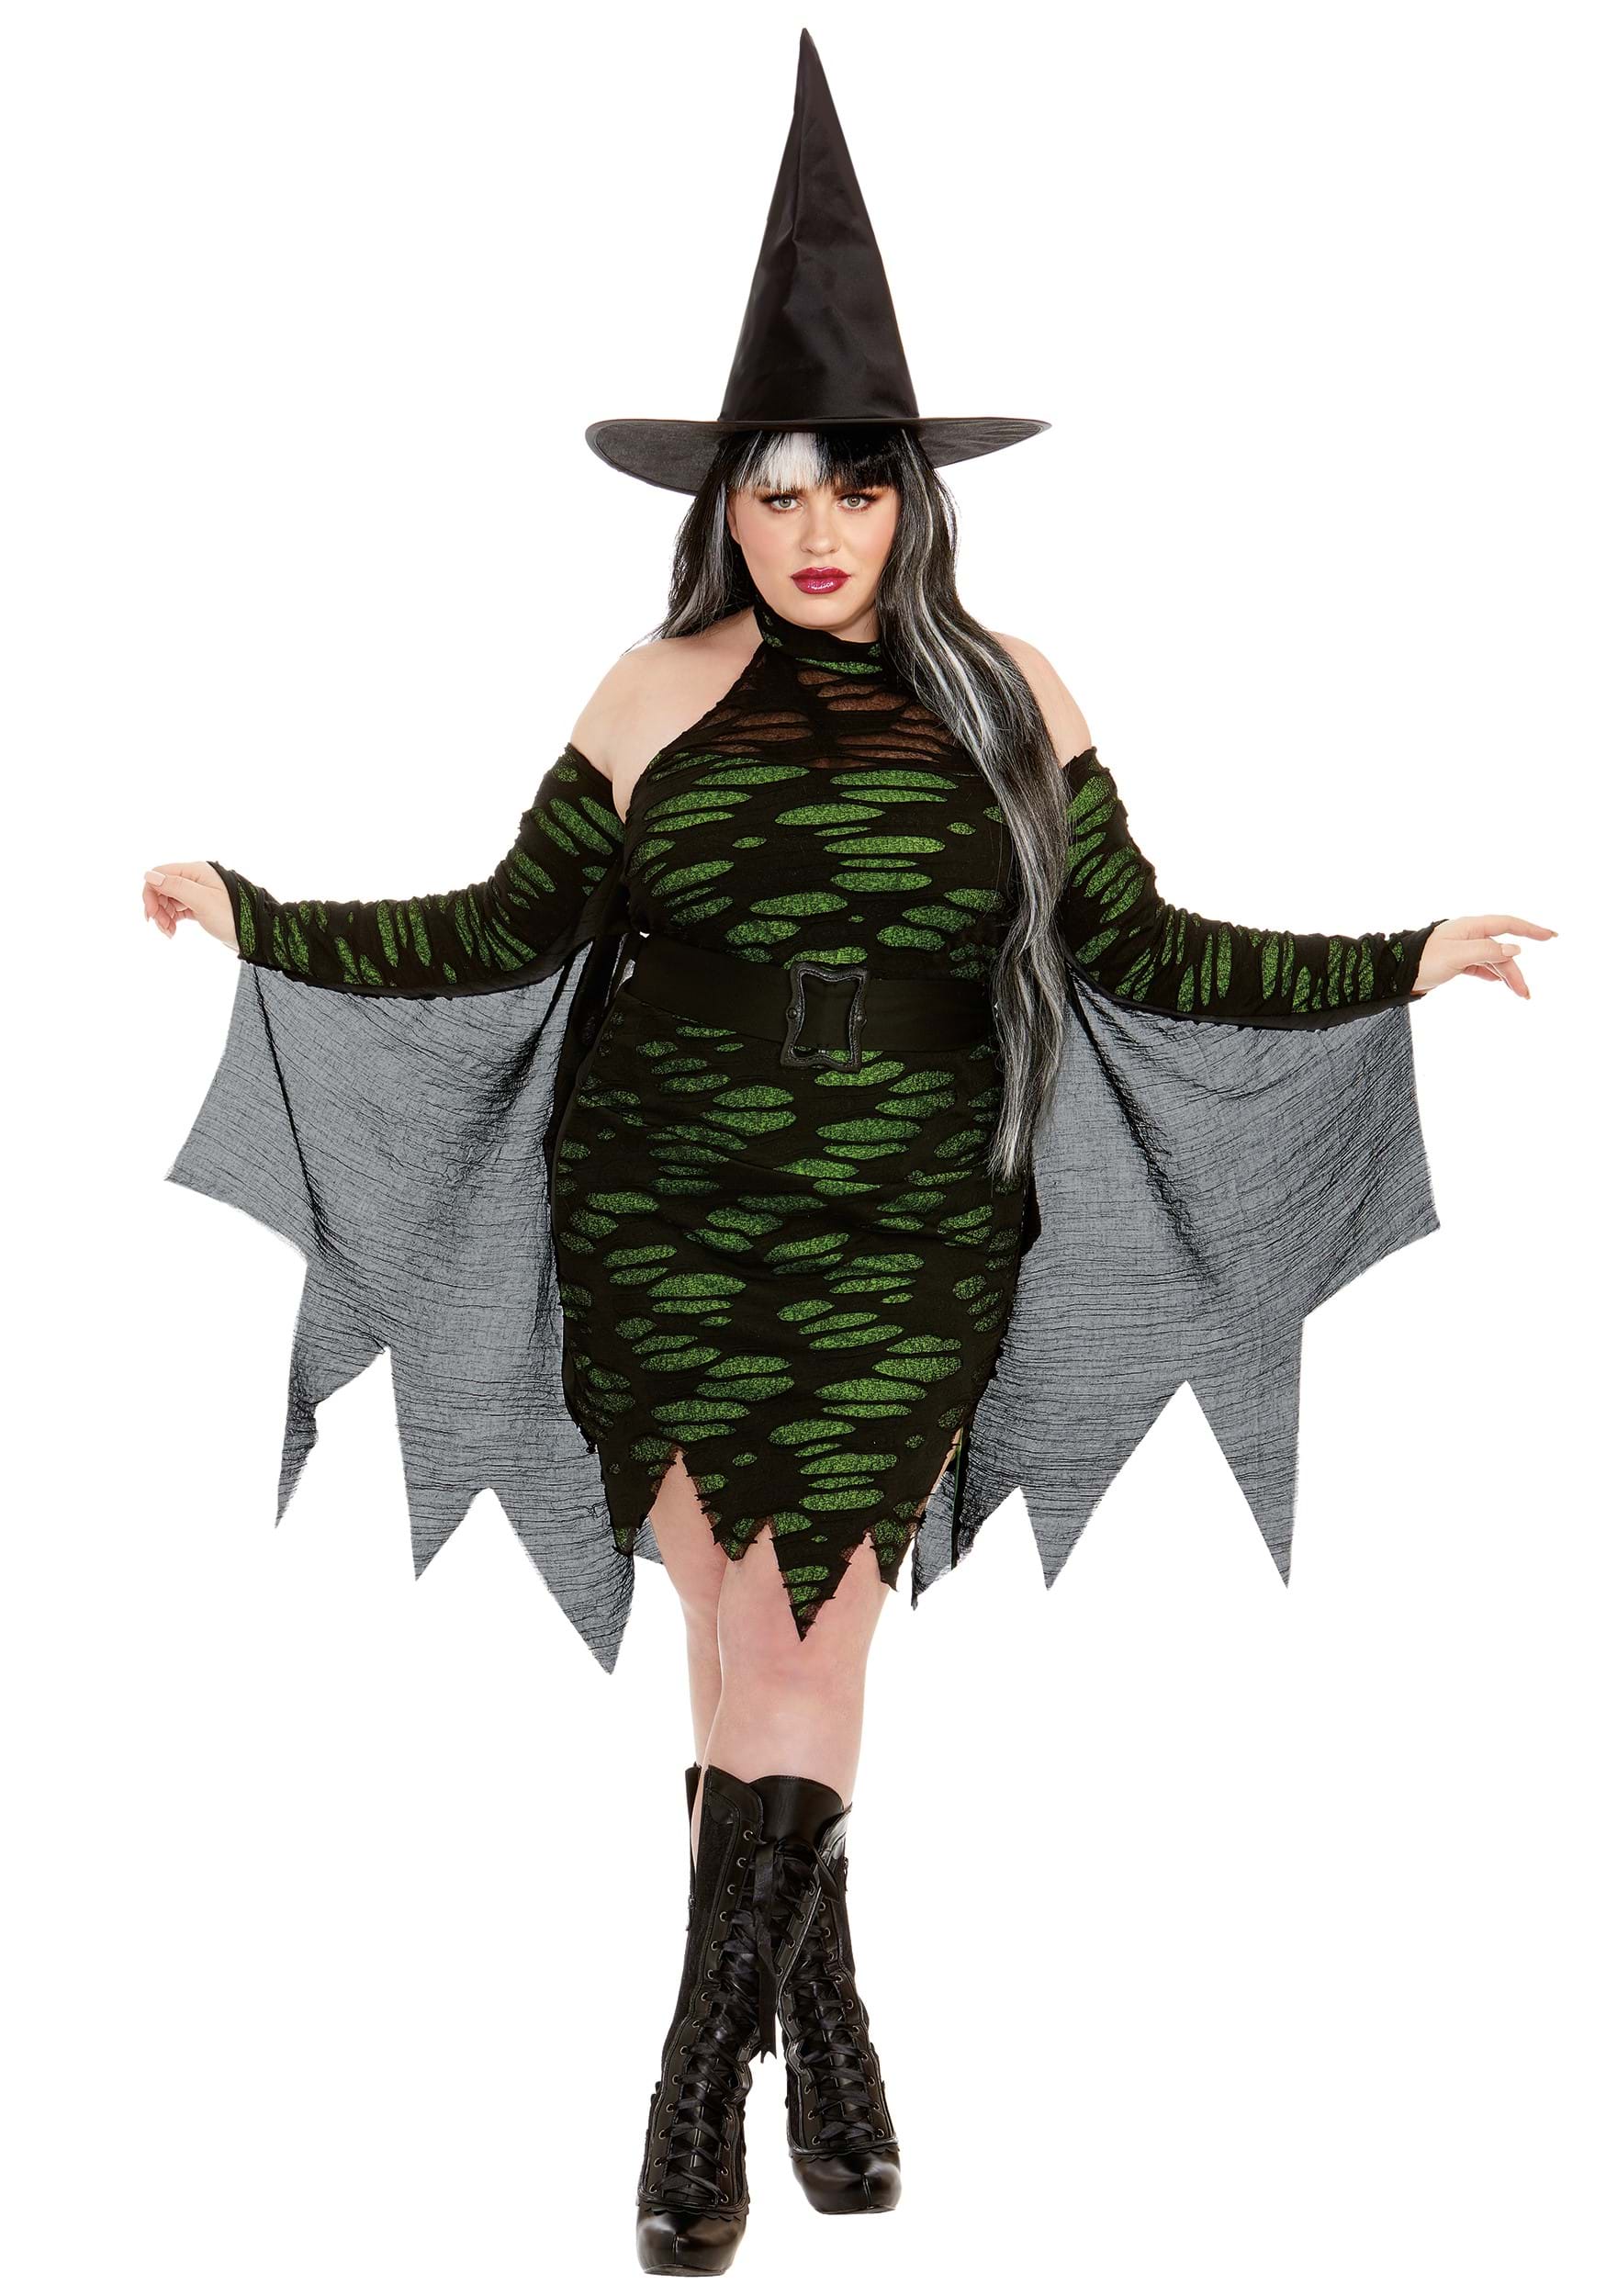 Photos - Fancy Dress Dreamgirl Plus Size Miss Enchantment Women's Costume Green/Black DR122